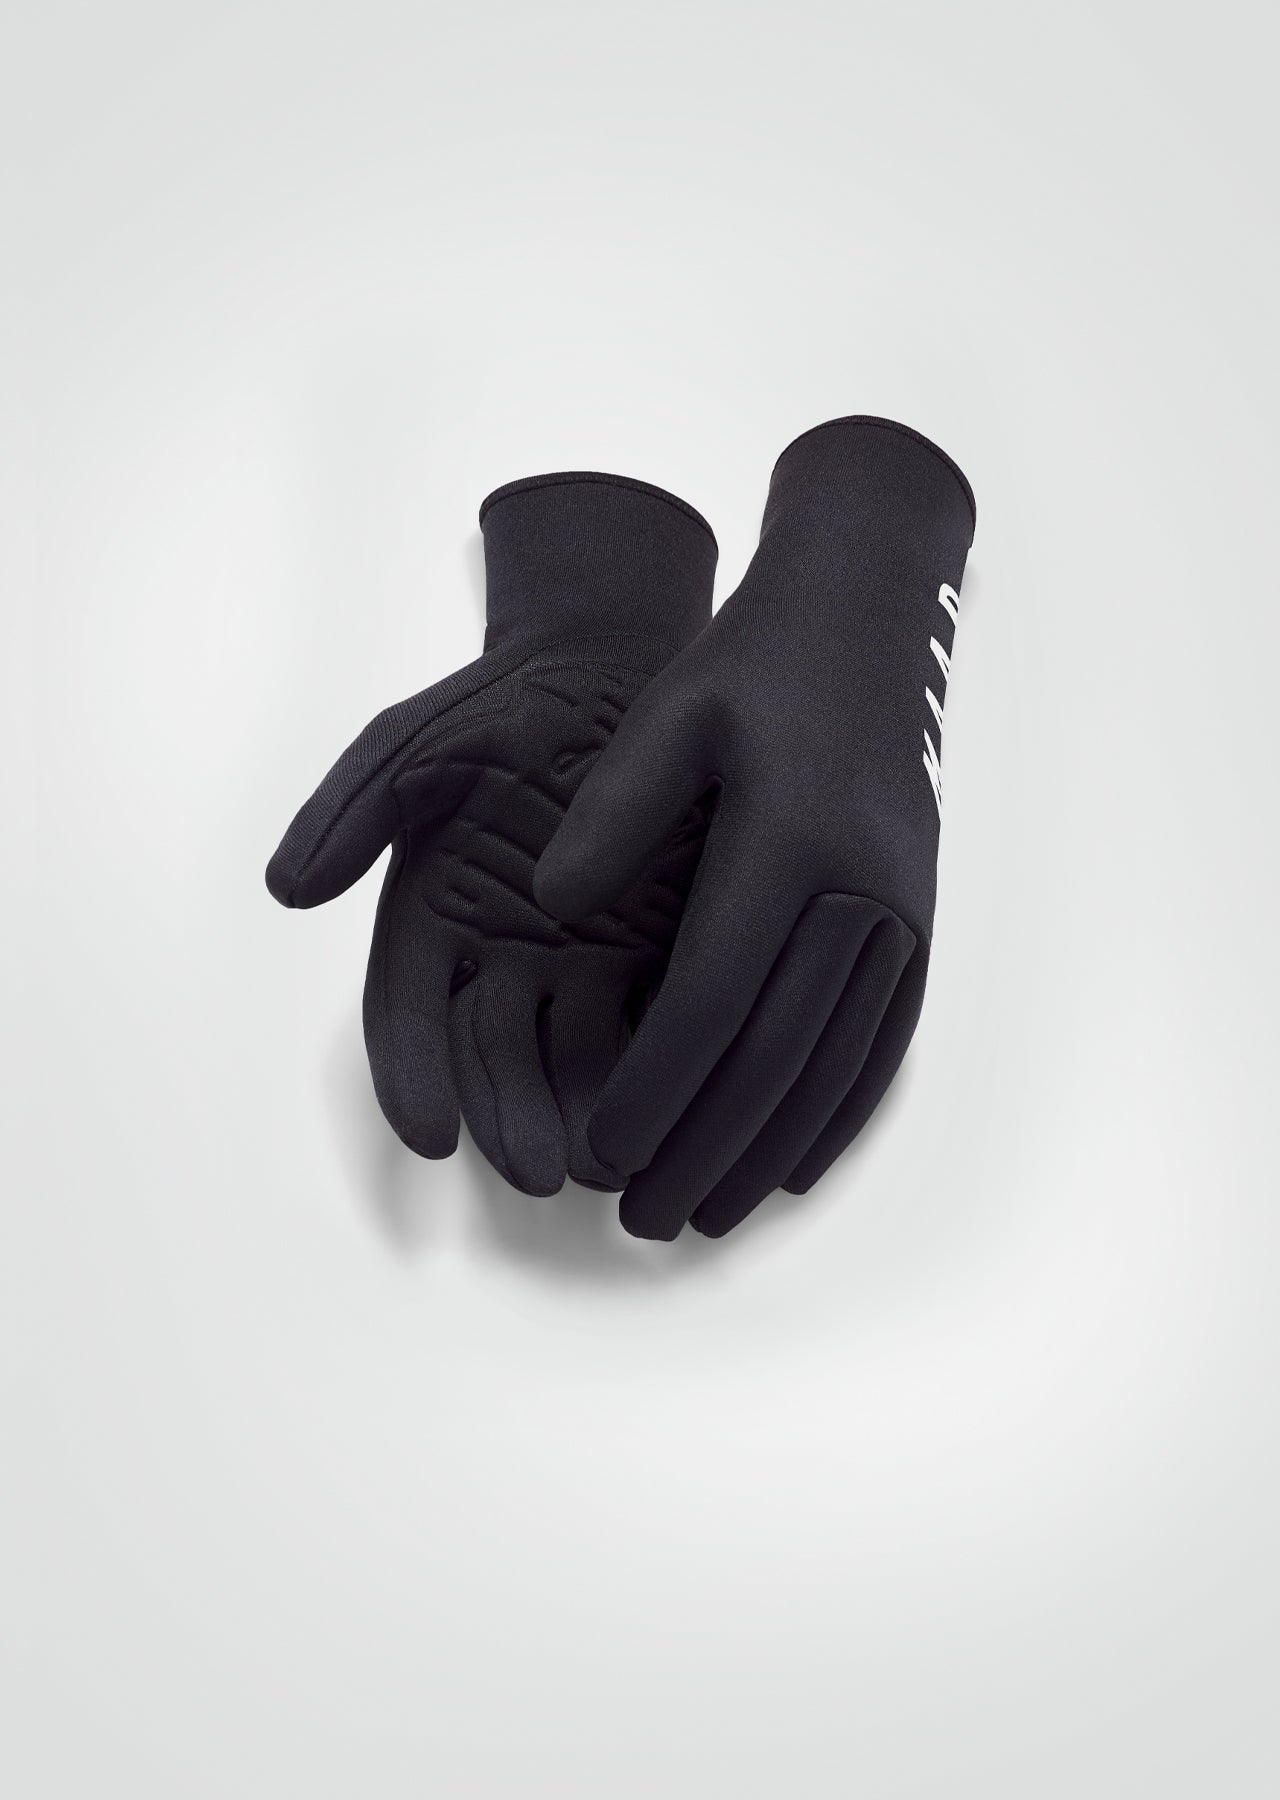 Deep Winter Neo Glove